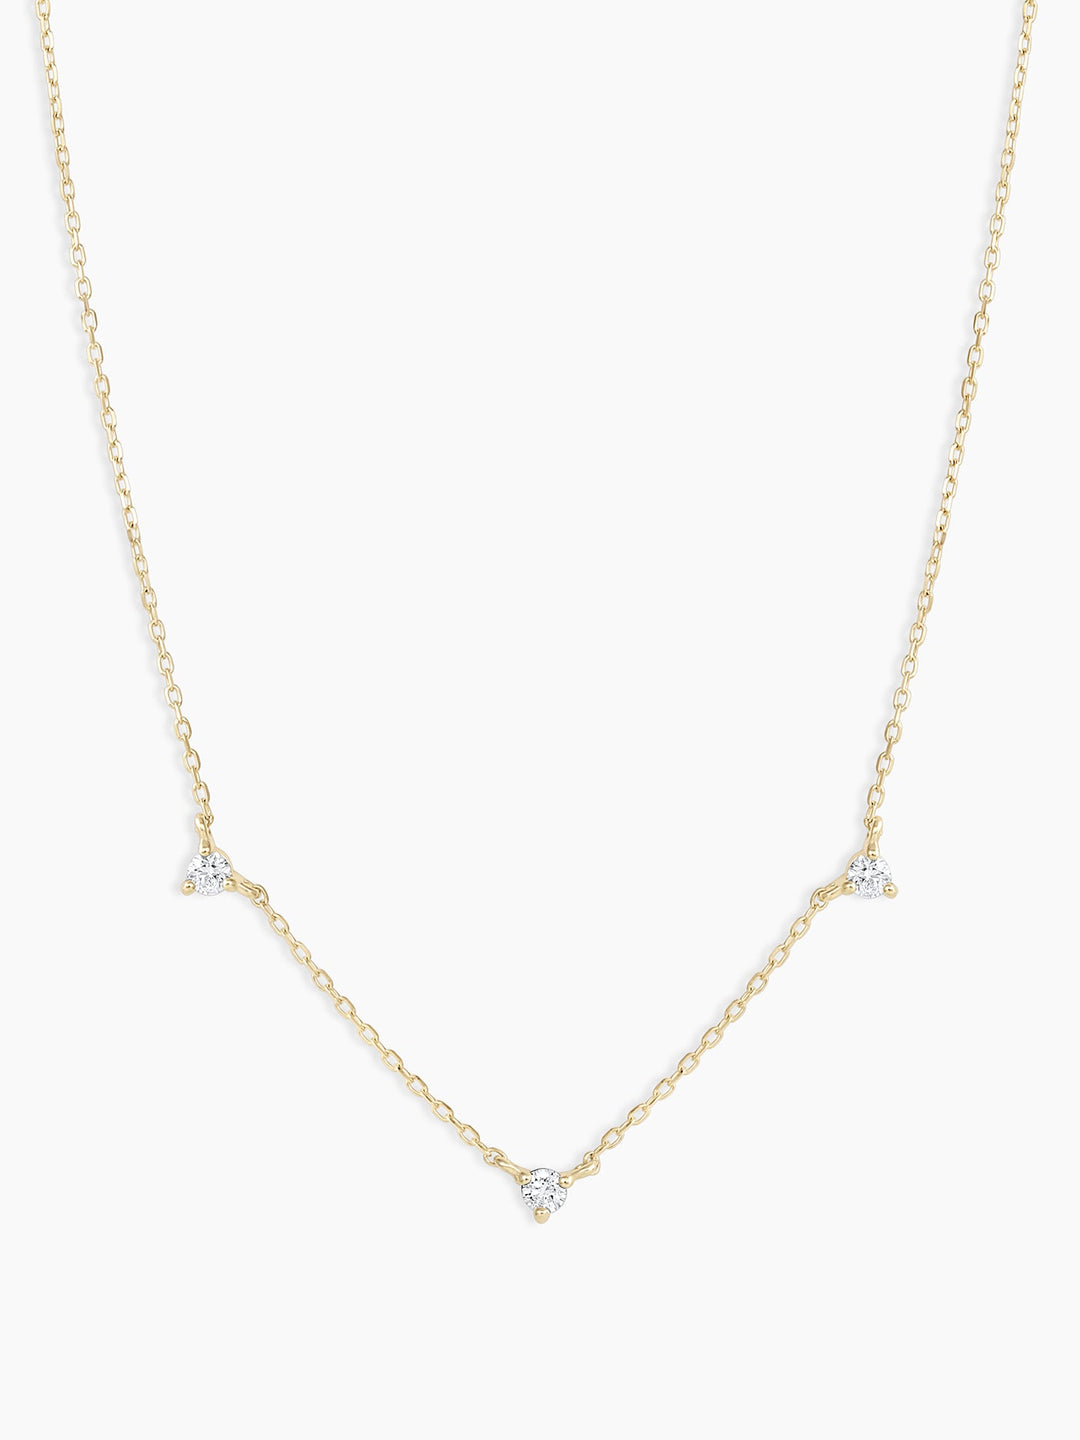 Diamond Eve NecklaceDiamond trio necklace  daintyDiamond necklace || option::14k Solid Gold